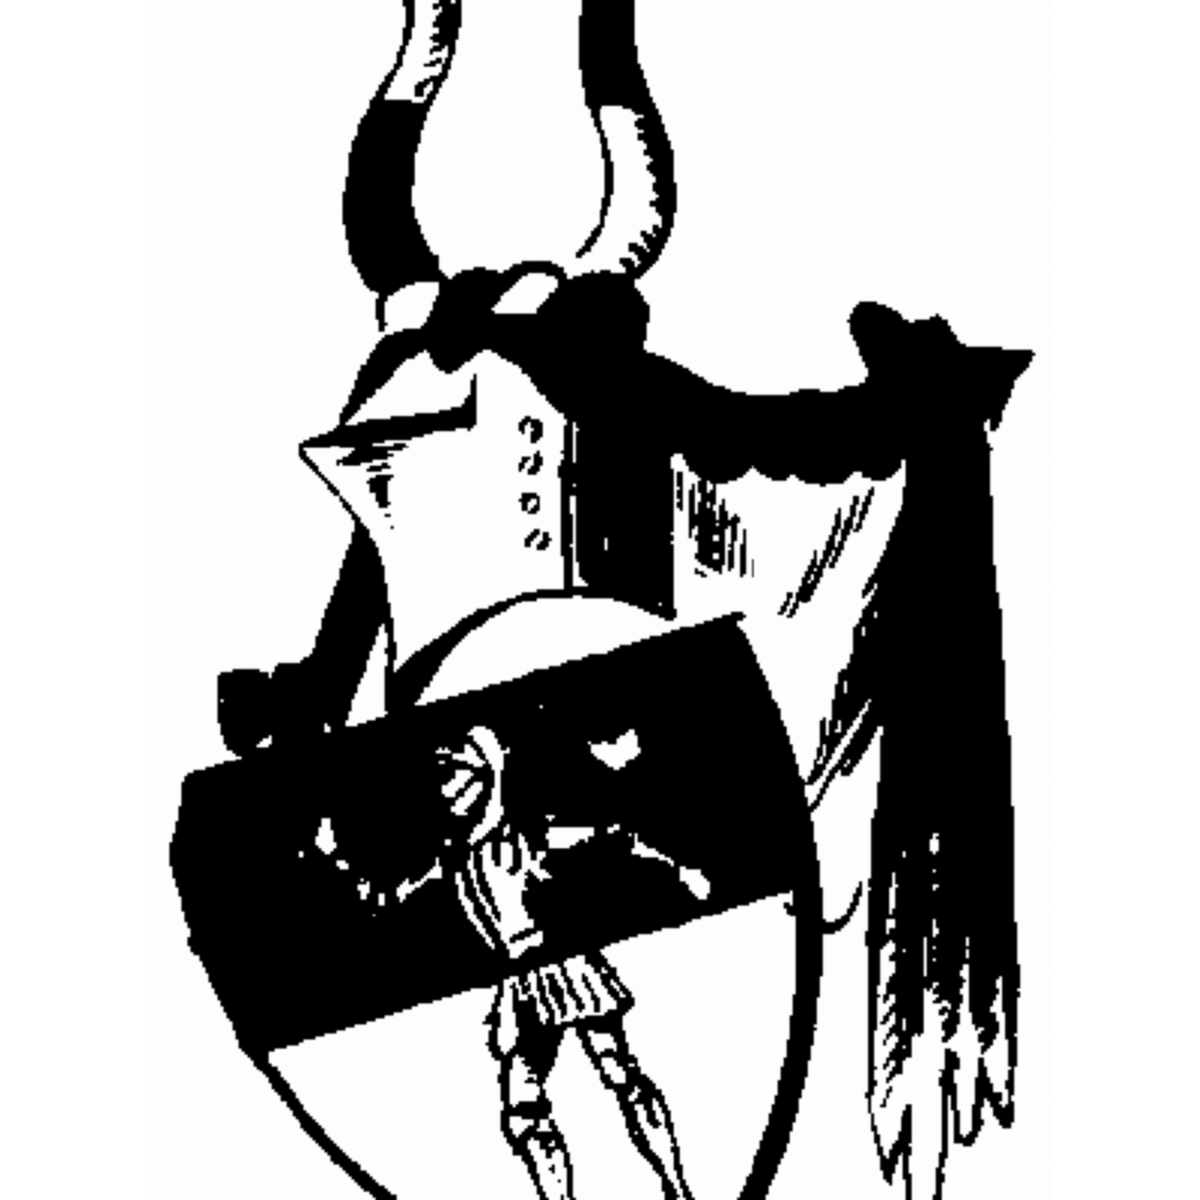 Wappen der Familie Perret